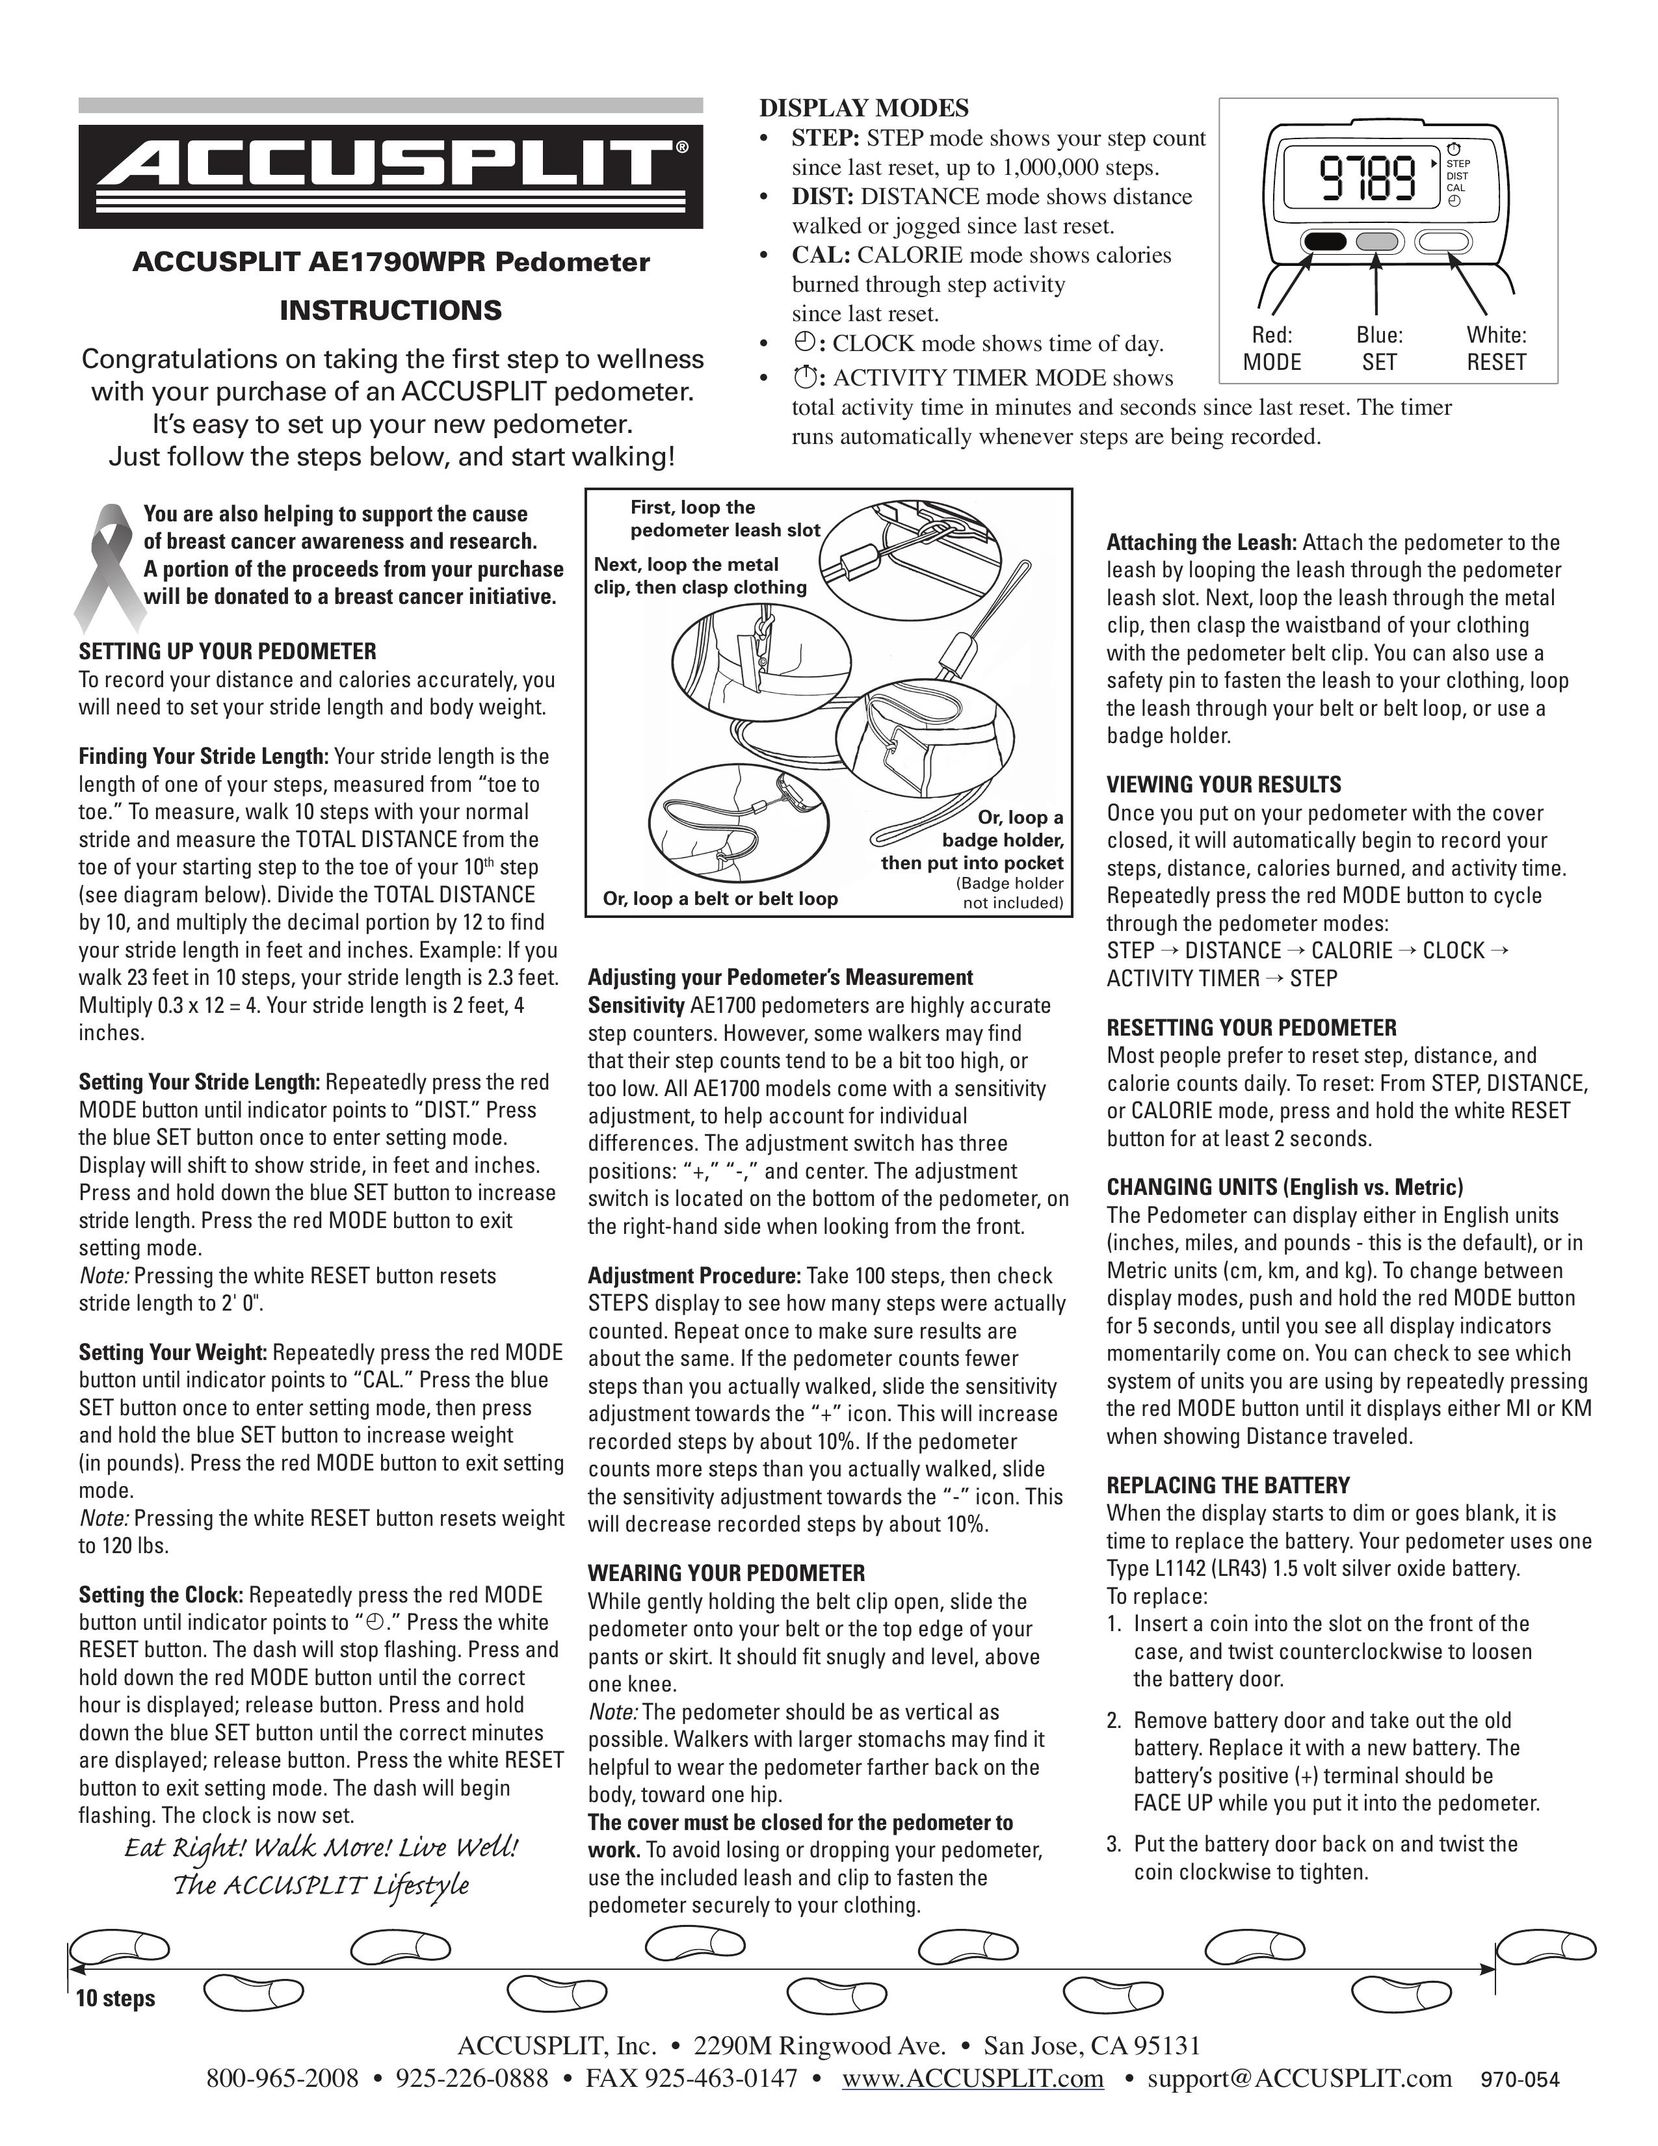 Accusplit AE1790WPR Fitness Electronics User Manual